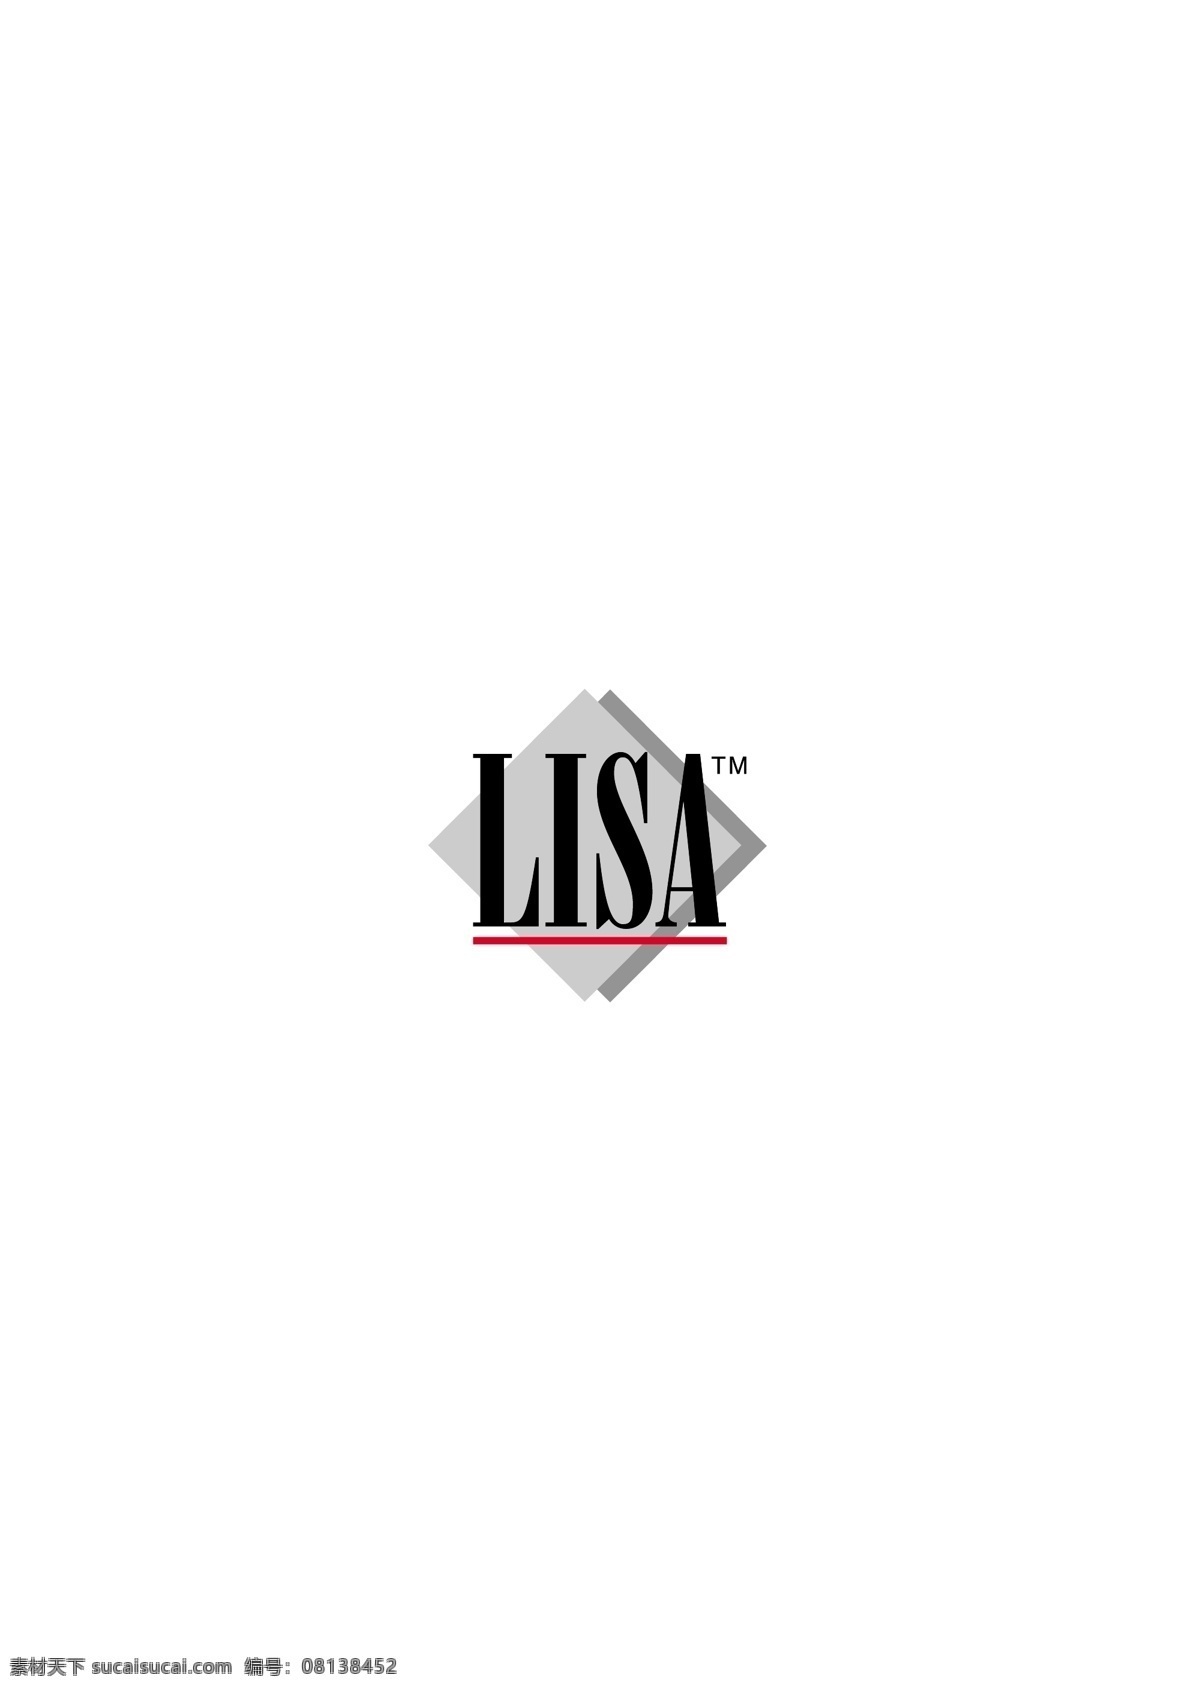 lisa logo大全 logo 设计欣赏 商业矢量 矢量下载 化工业 标志 标志设计 欣赏 网页矢量 矢量图 其他矢量图